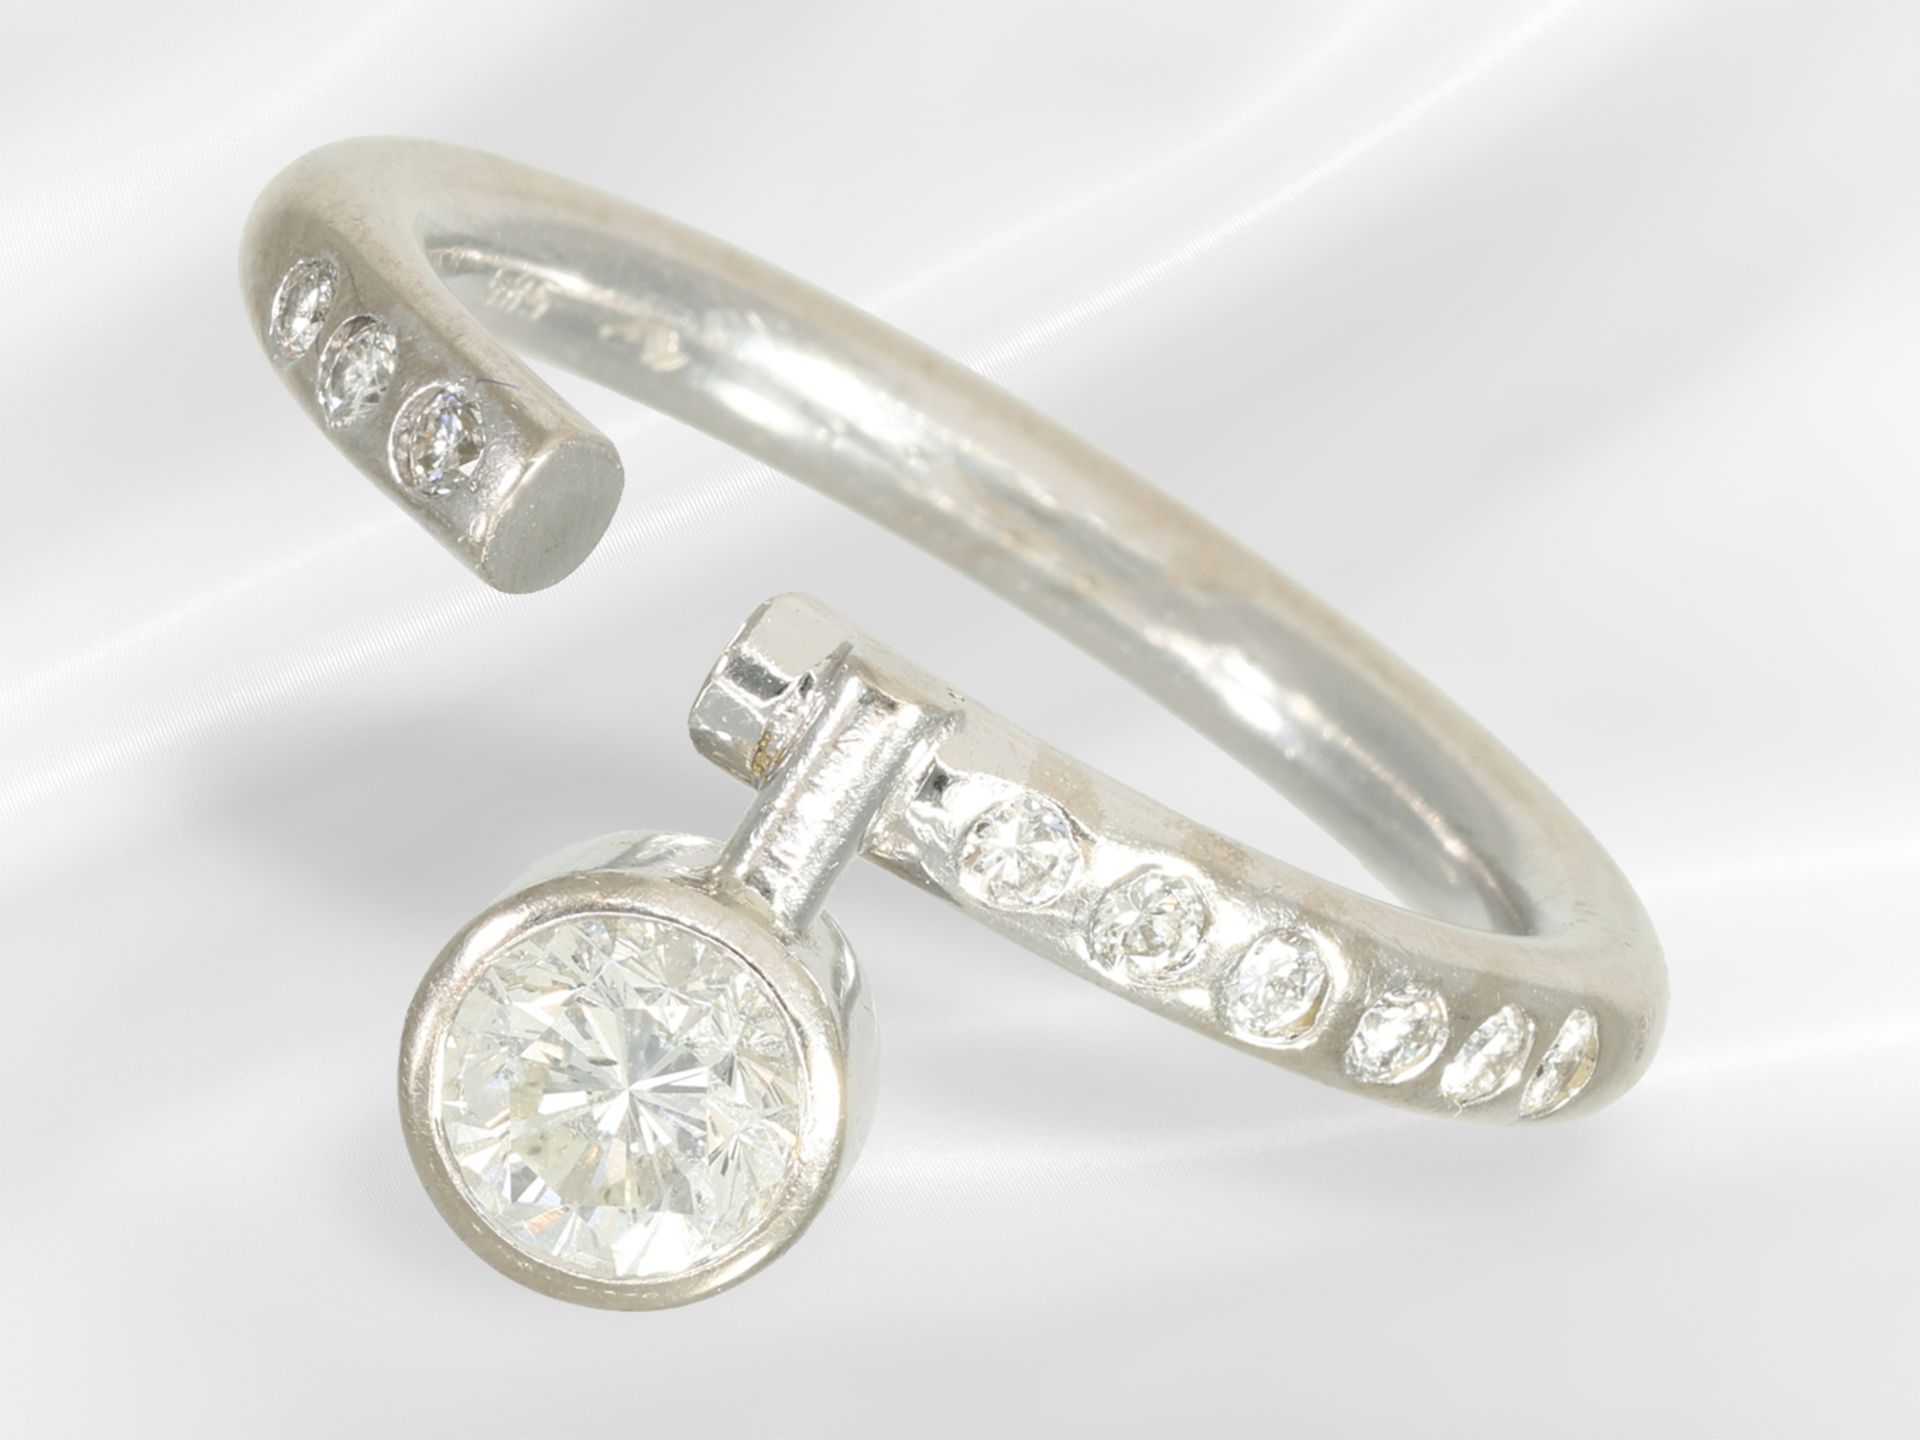 Ring: modern designer ring set with brilliant-cut diamonds